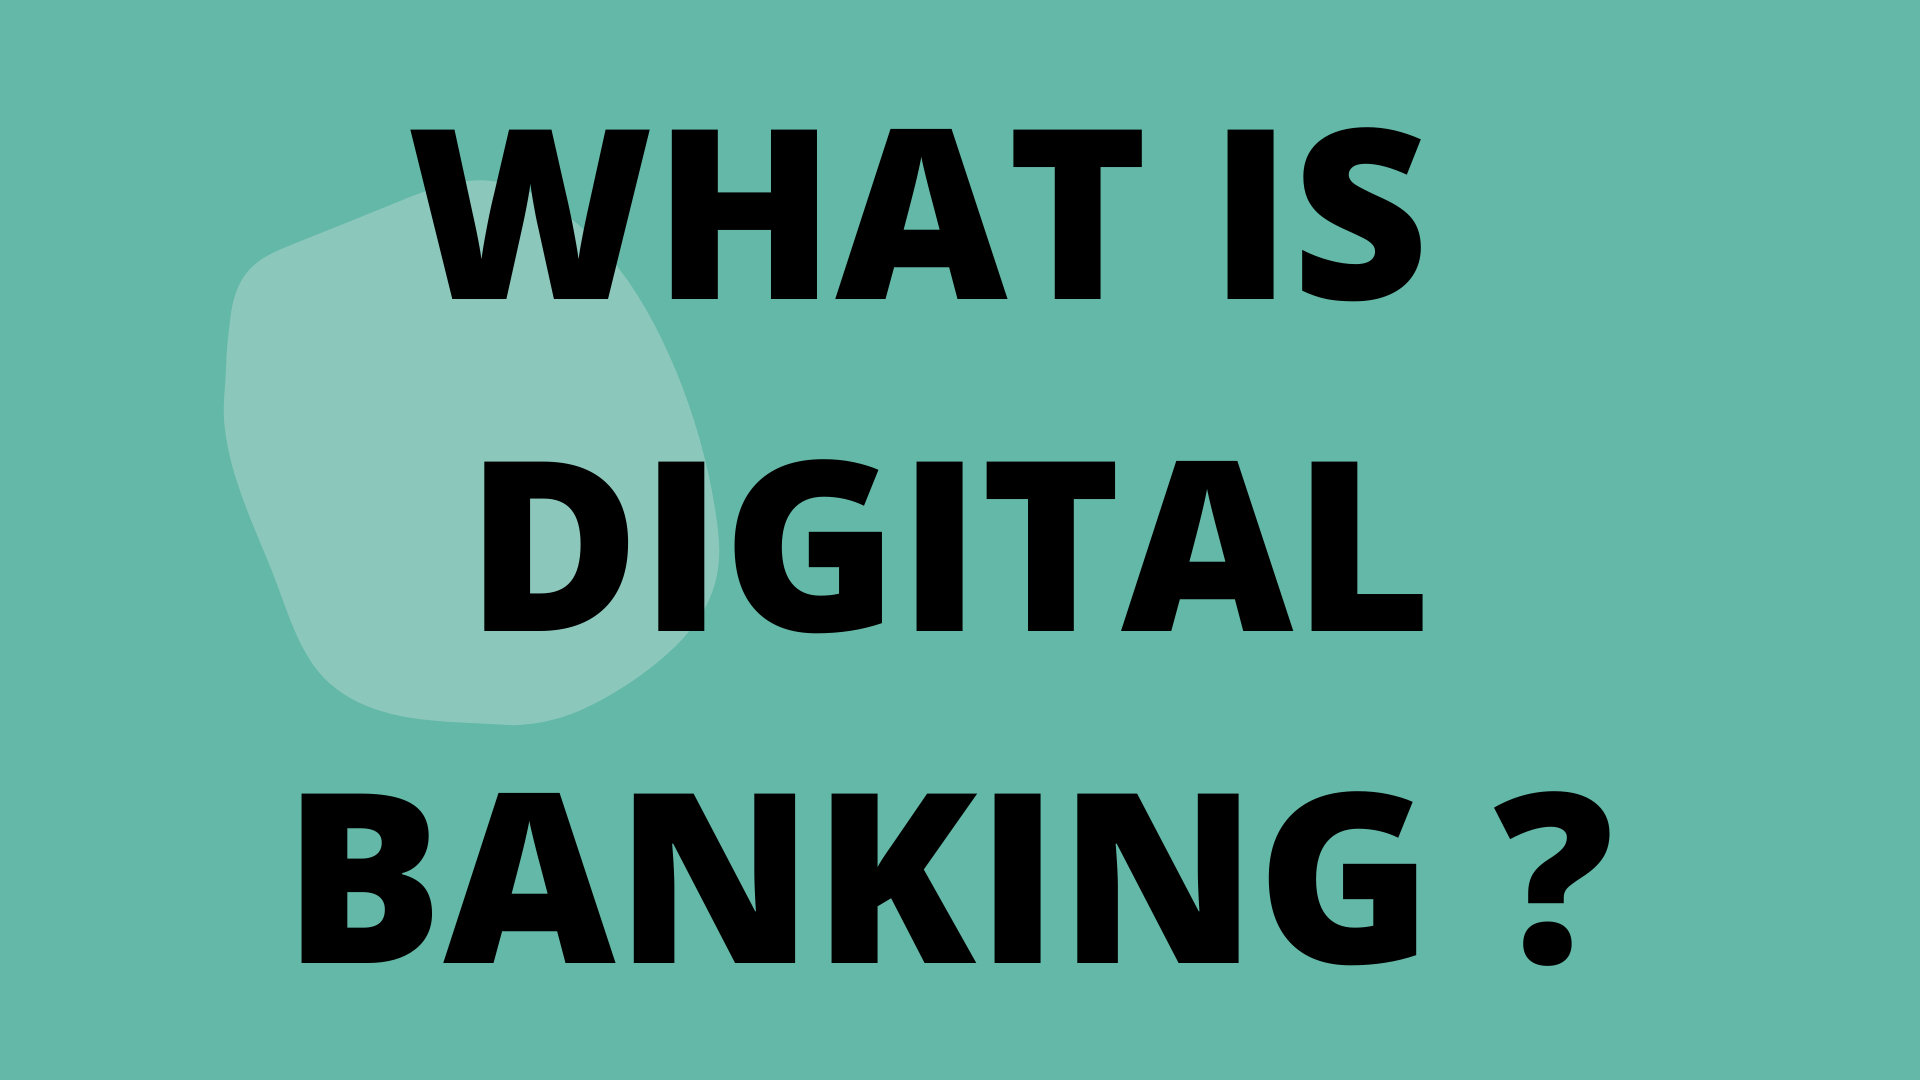 Digital Banking in Detail